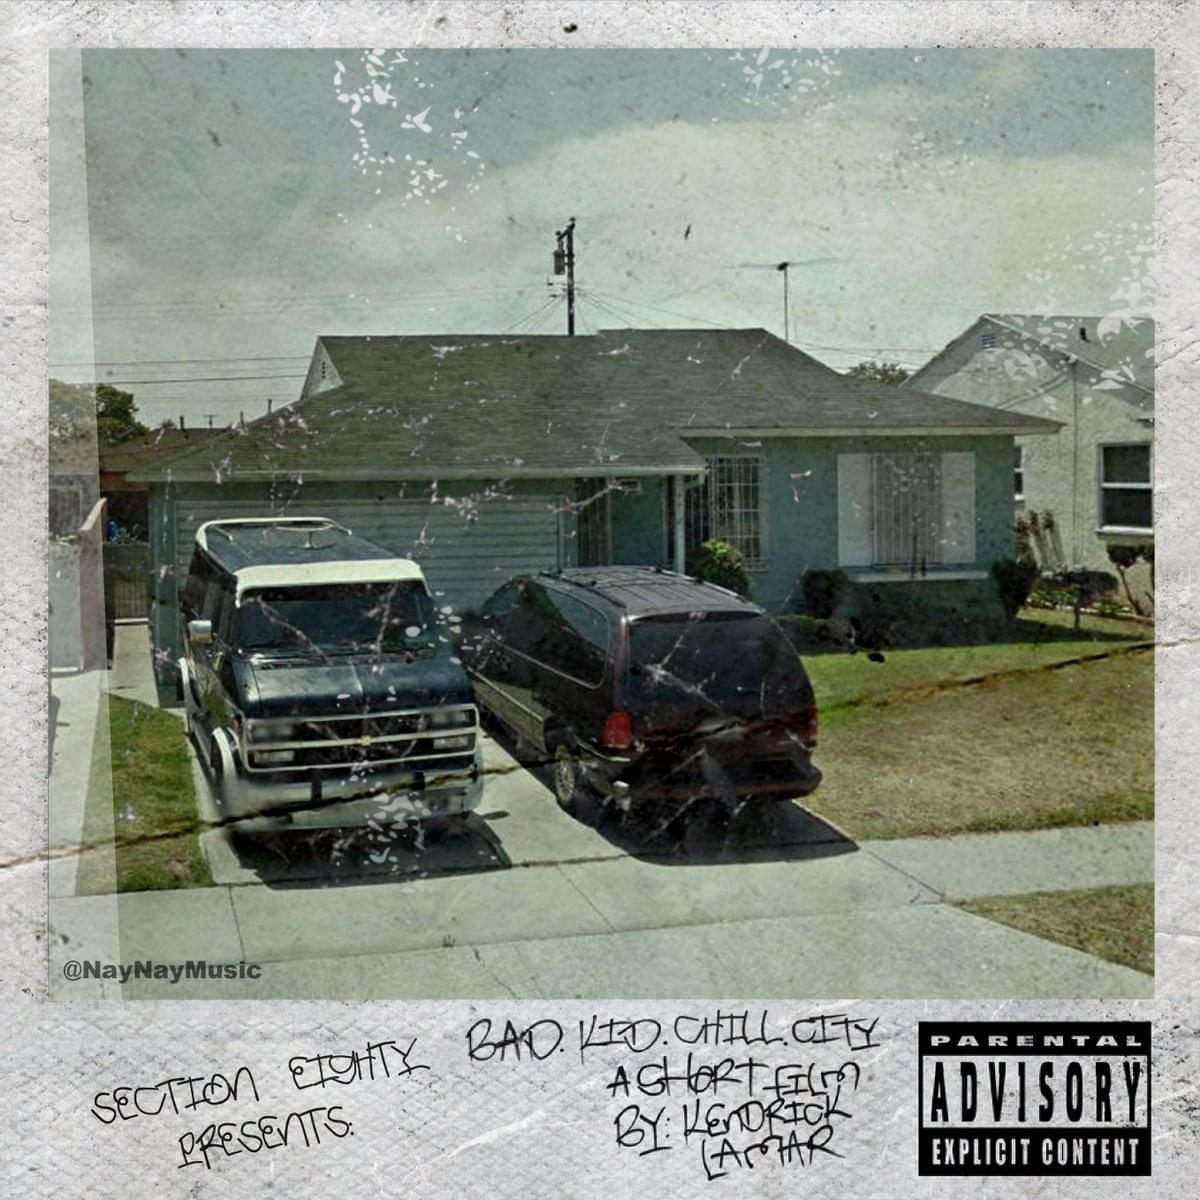 ALBUM: Kendrick Lamar - Bad Kid Chill City